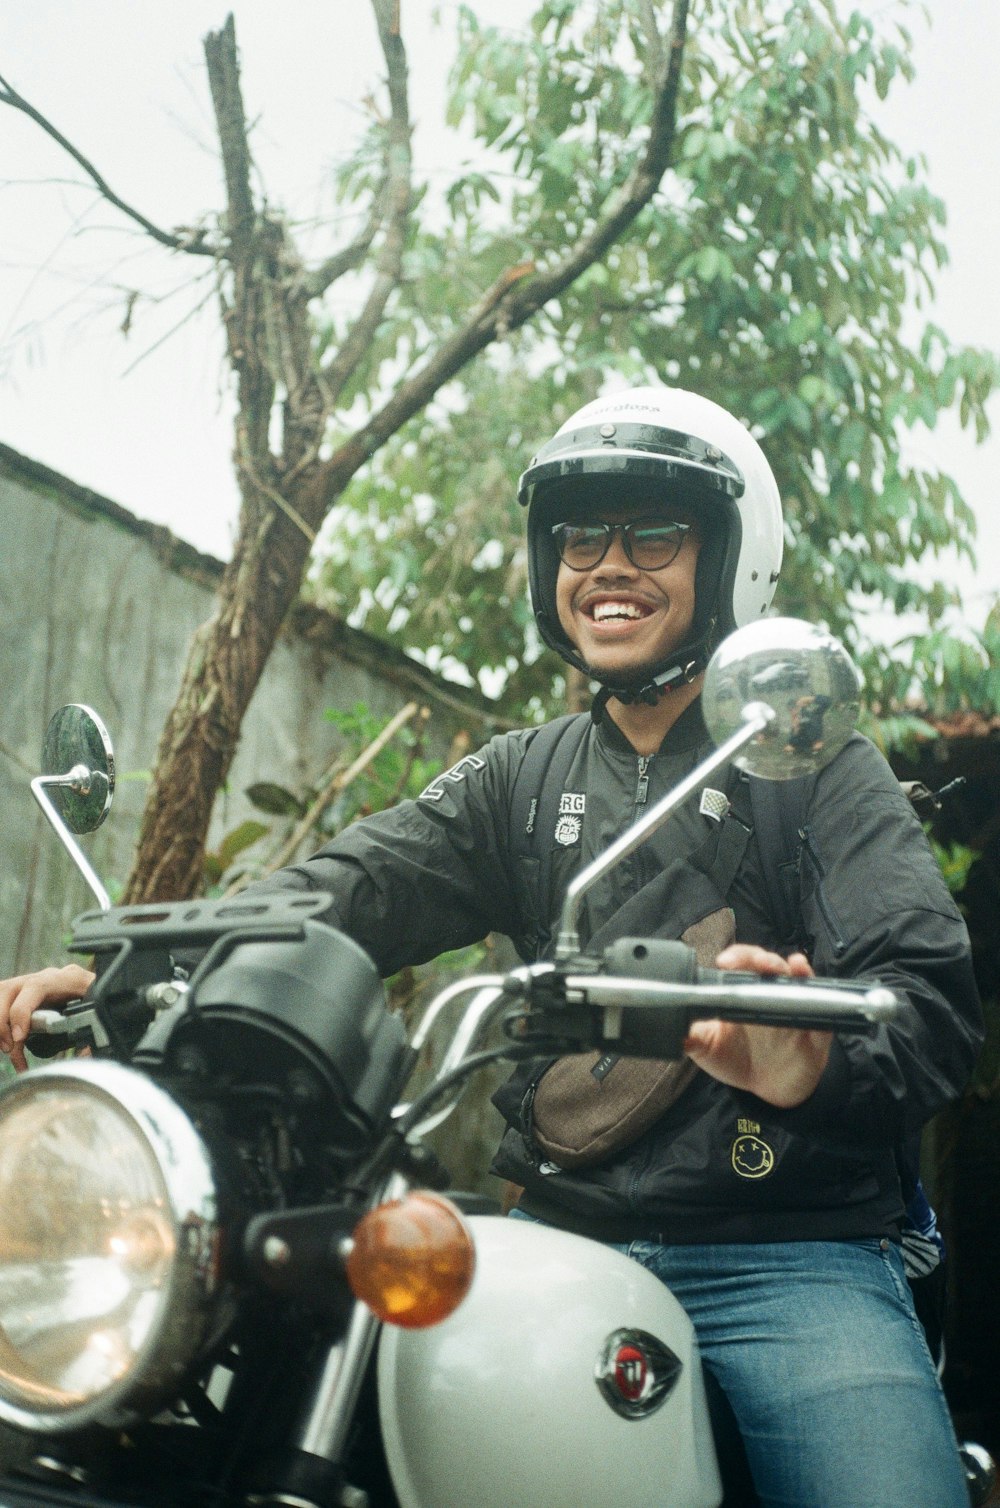 man in black leather jacket wearing helmet riding motorcycle during daytime